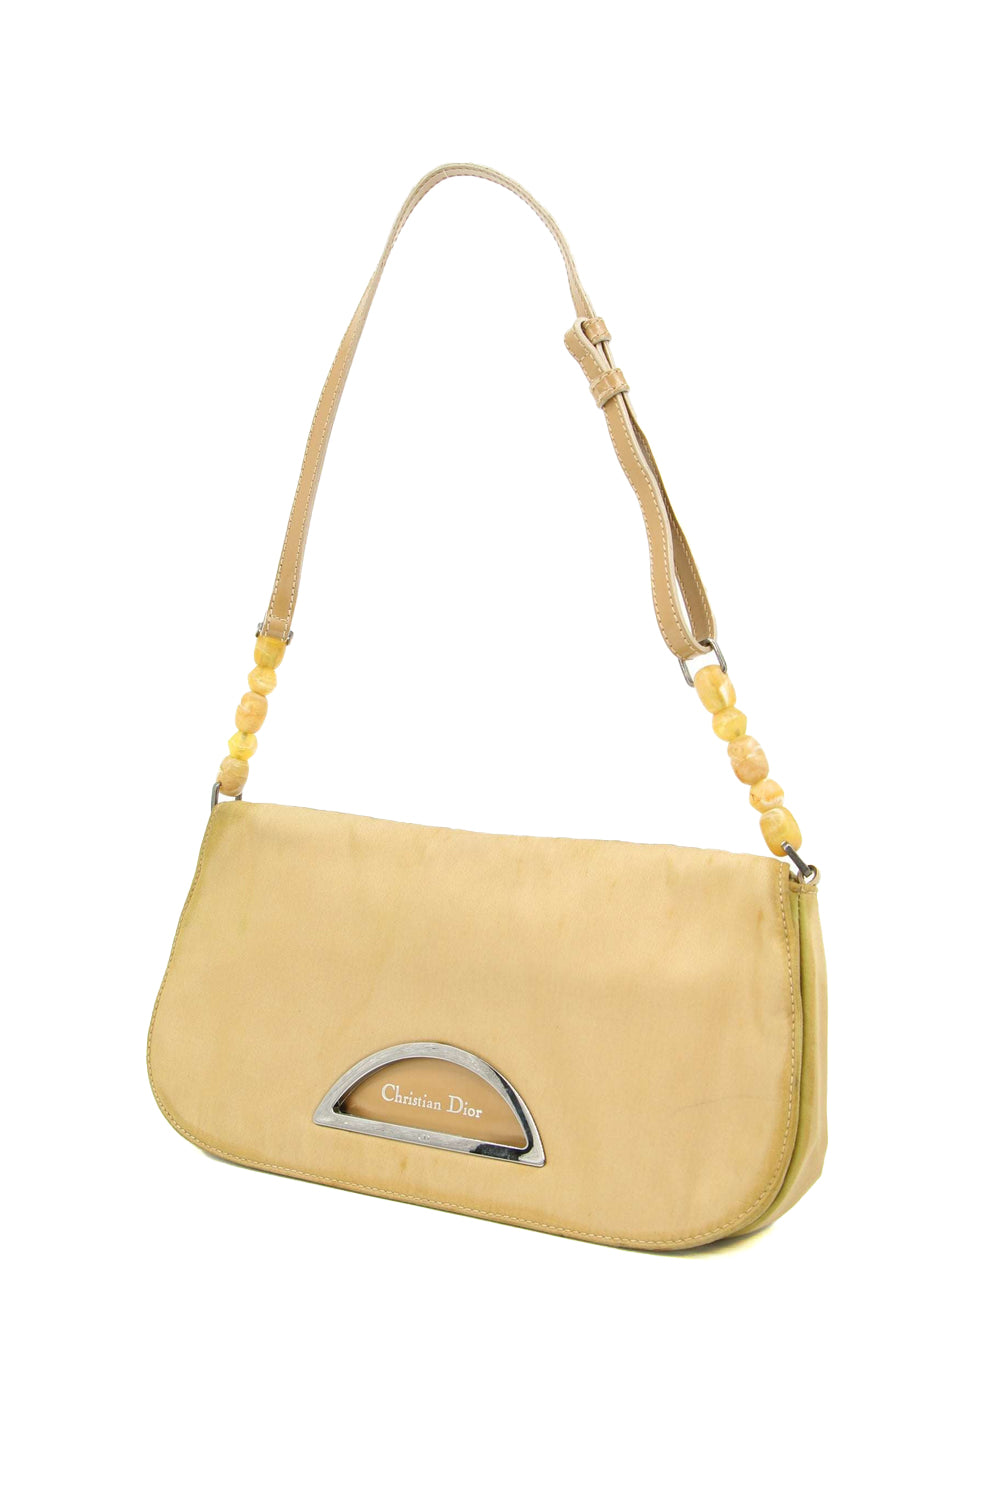 Christian Dior Vintage Leather Saddle Bag - Yellow Shoulder Bags